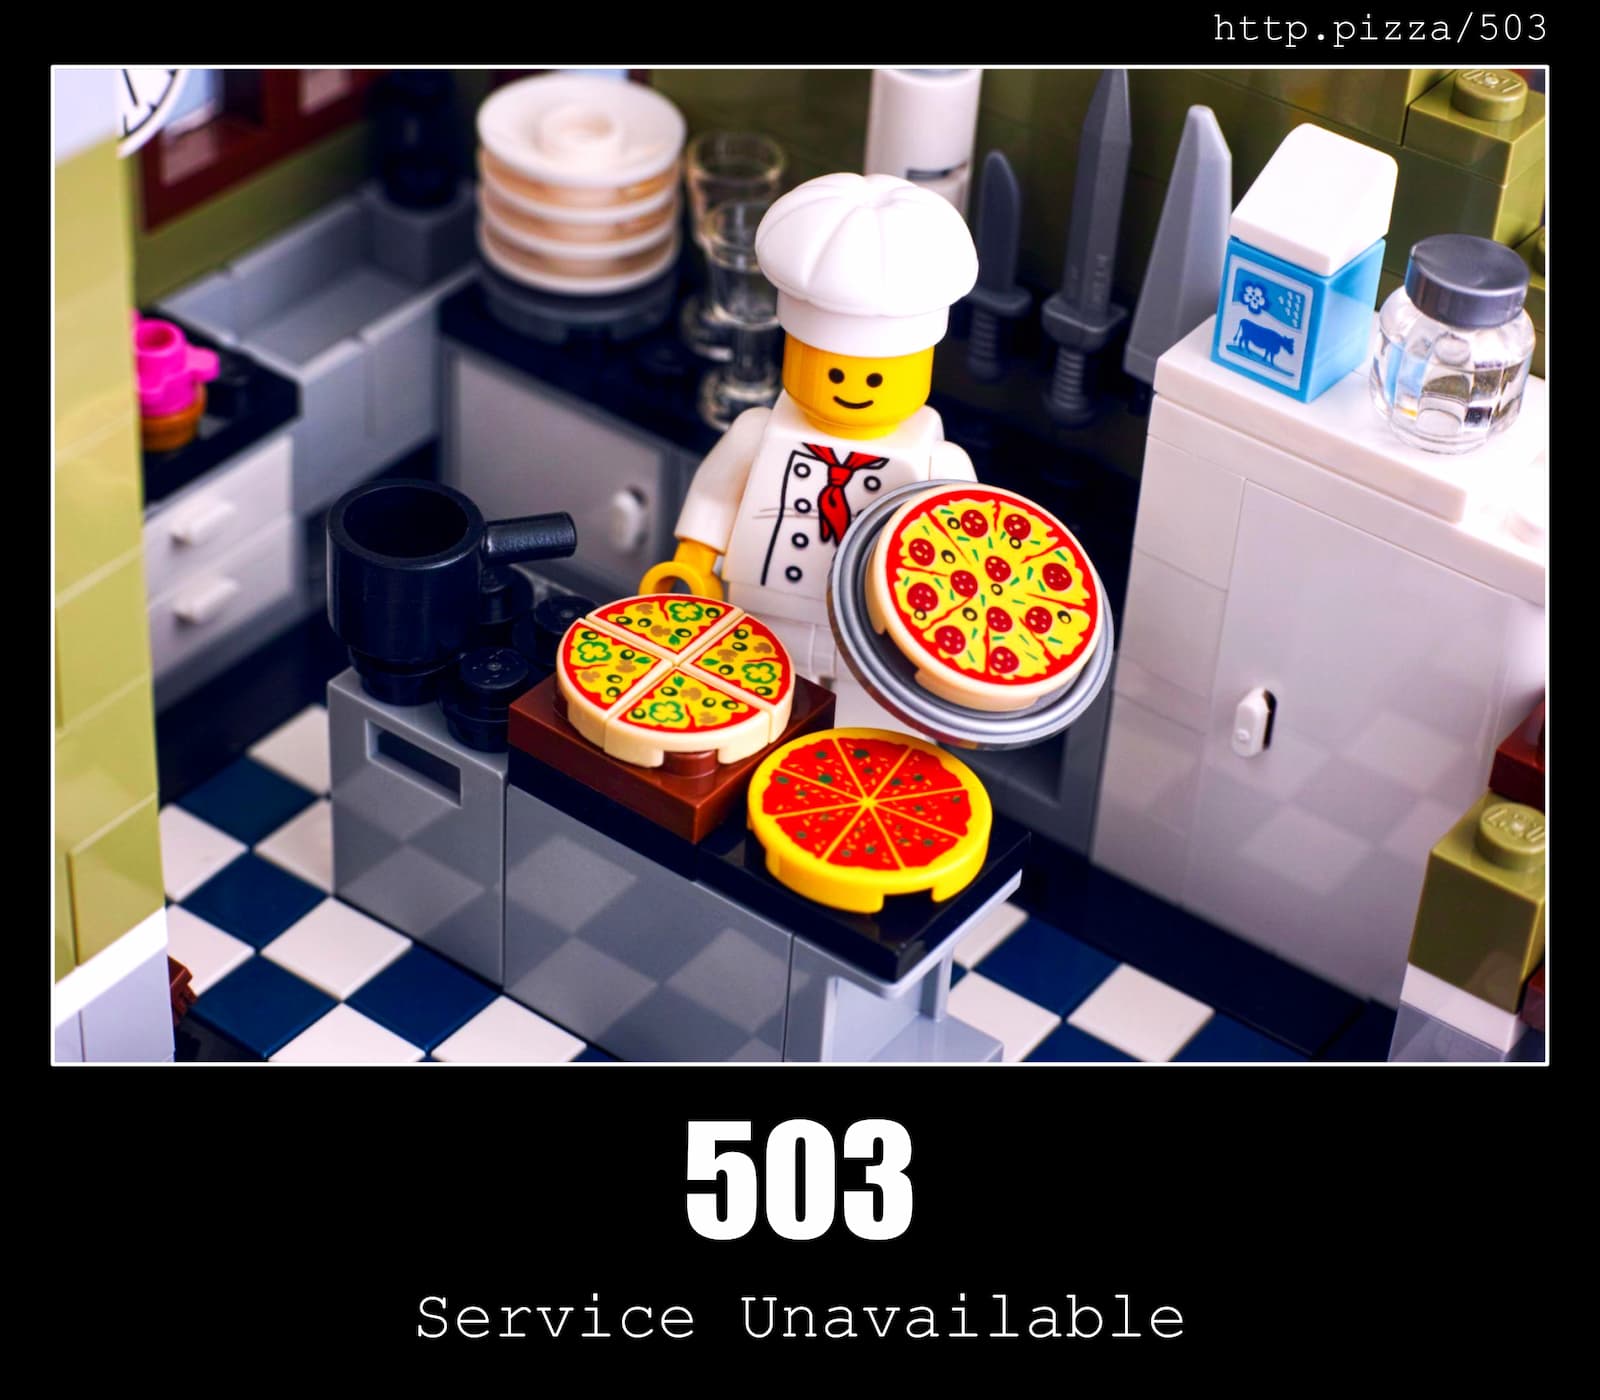 HTTP Status Code 503 Service Unavailable & Pizzas